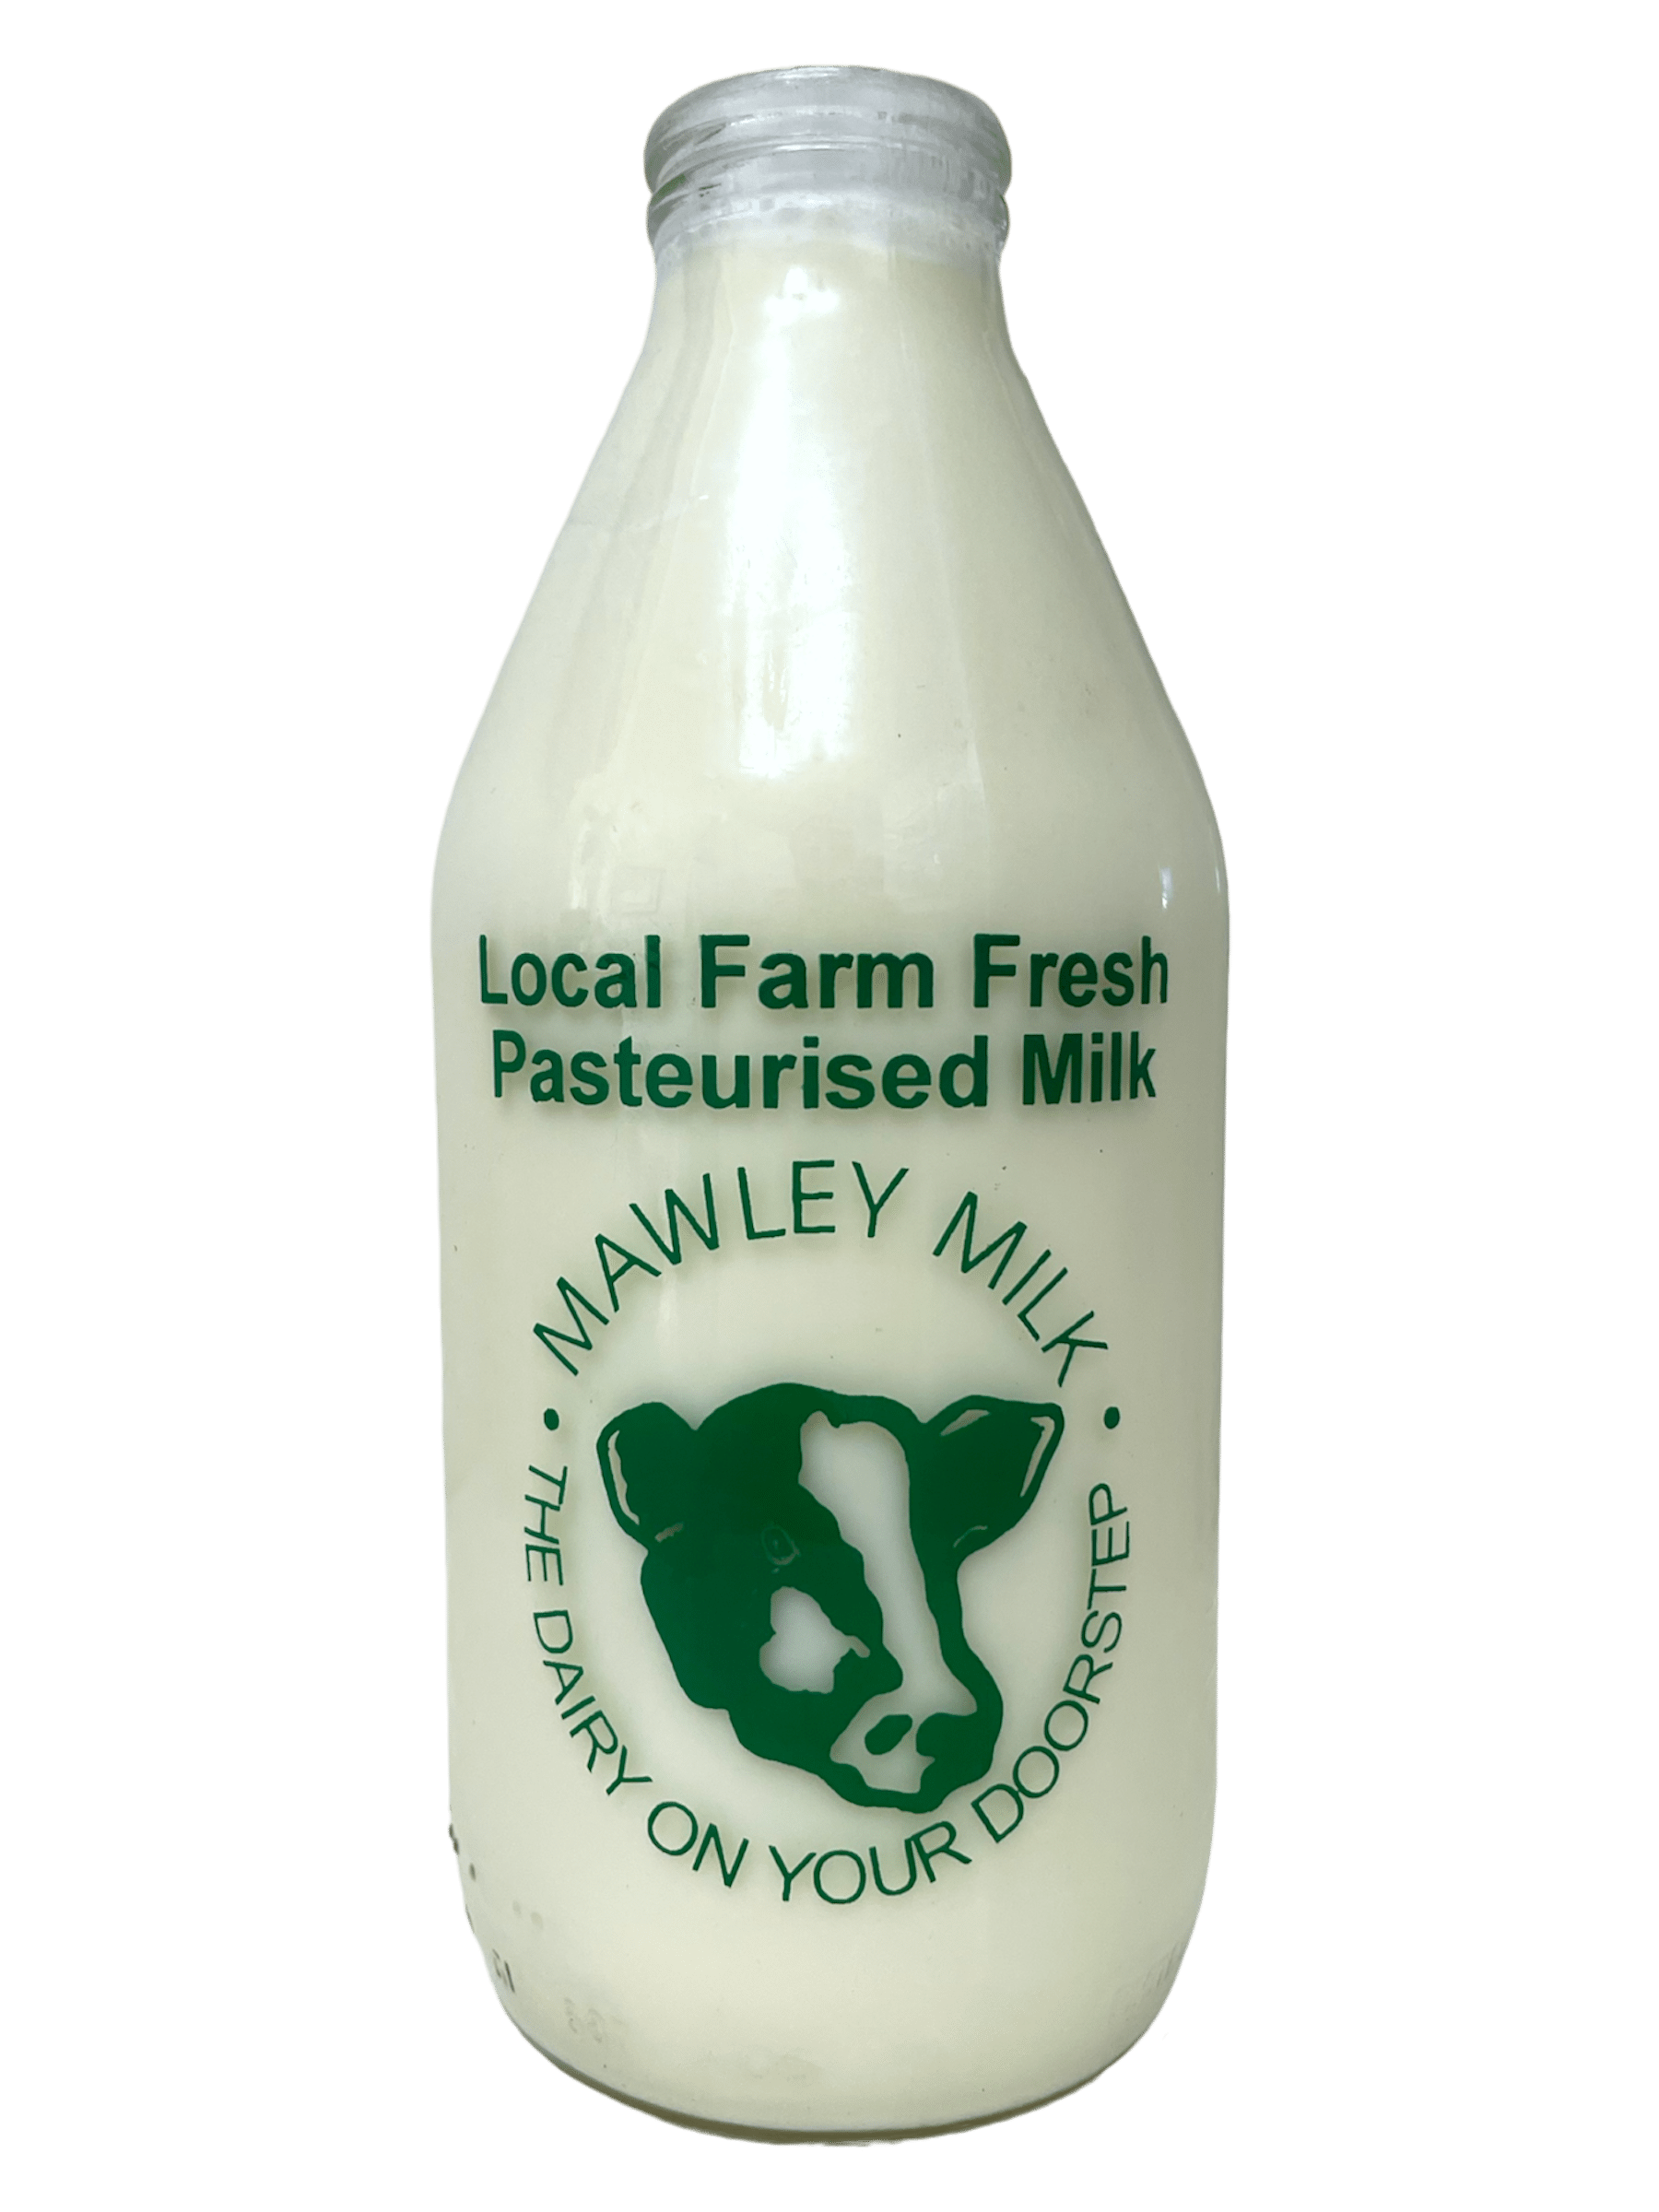 Mawley Milk - www.Kelis.info #KelisTheBottleBank